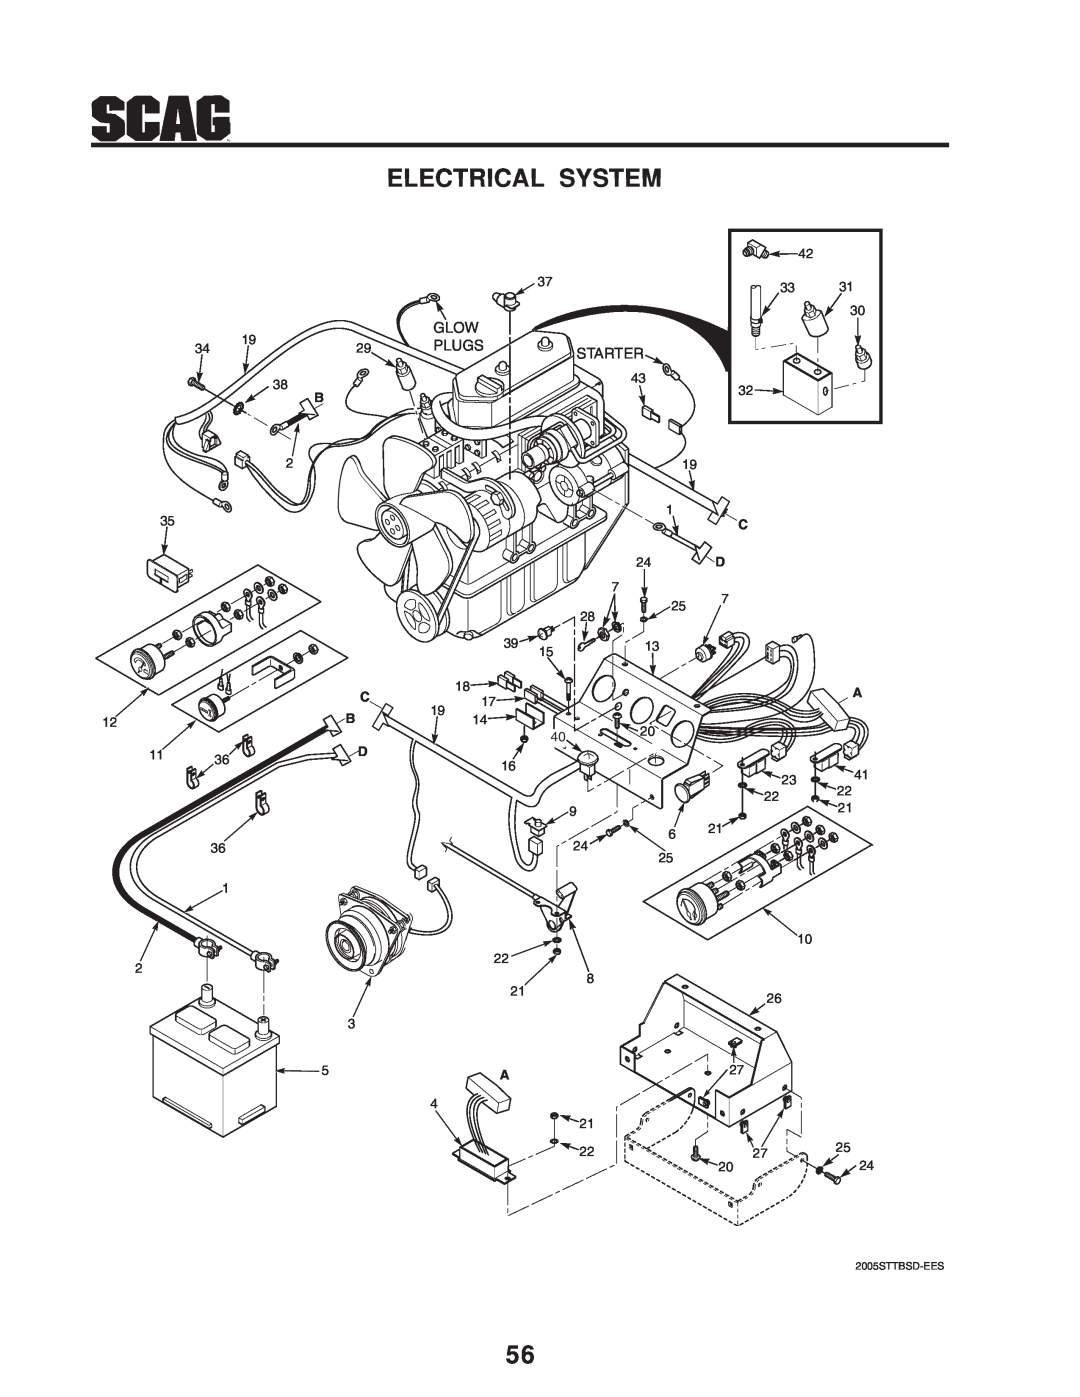 Scag Power Equipment STT-31BSD manual Electrical System, Glow, Plugs, Starter, C B D, 2005STTBSD-EES 